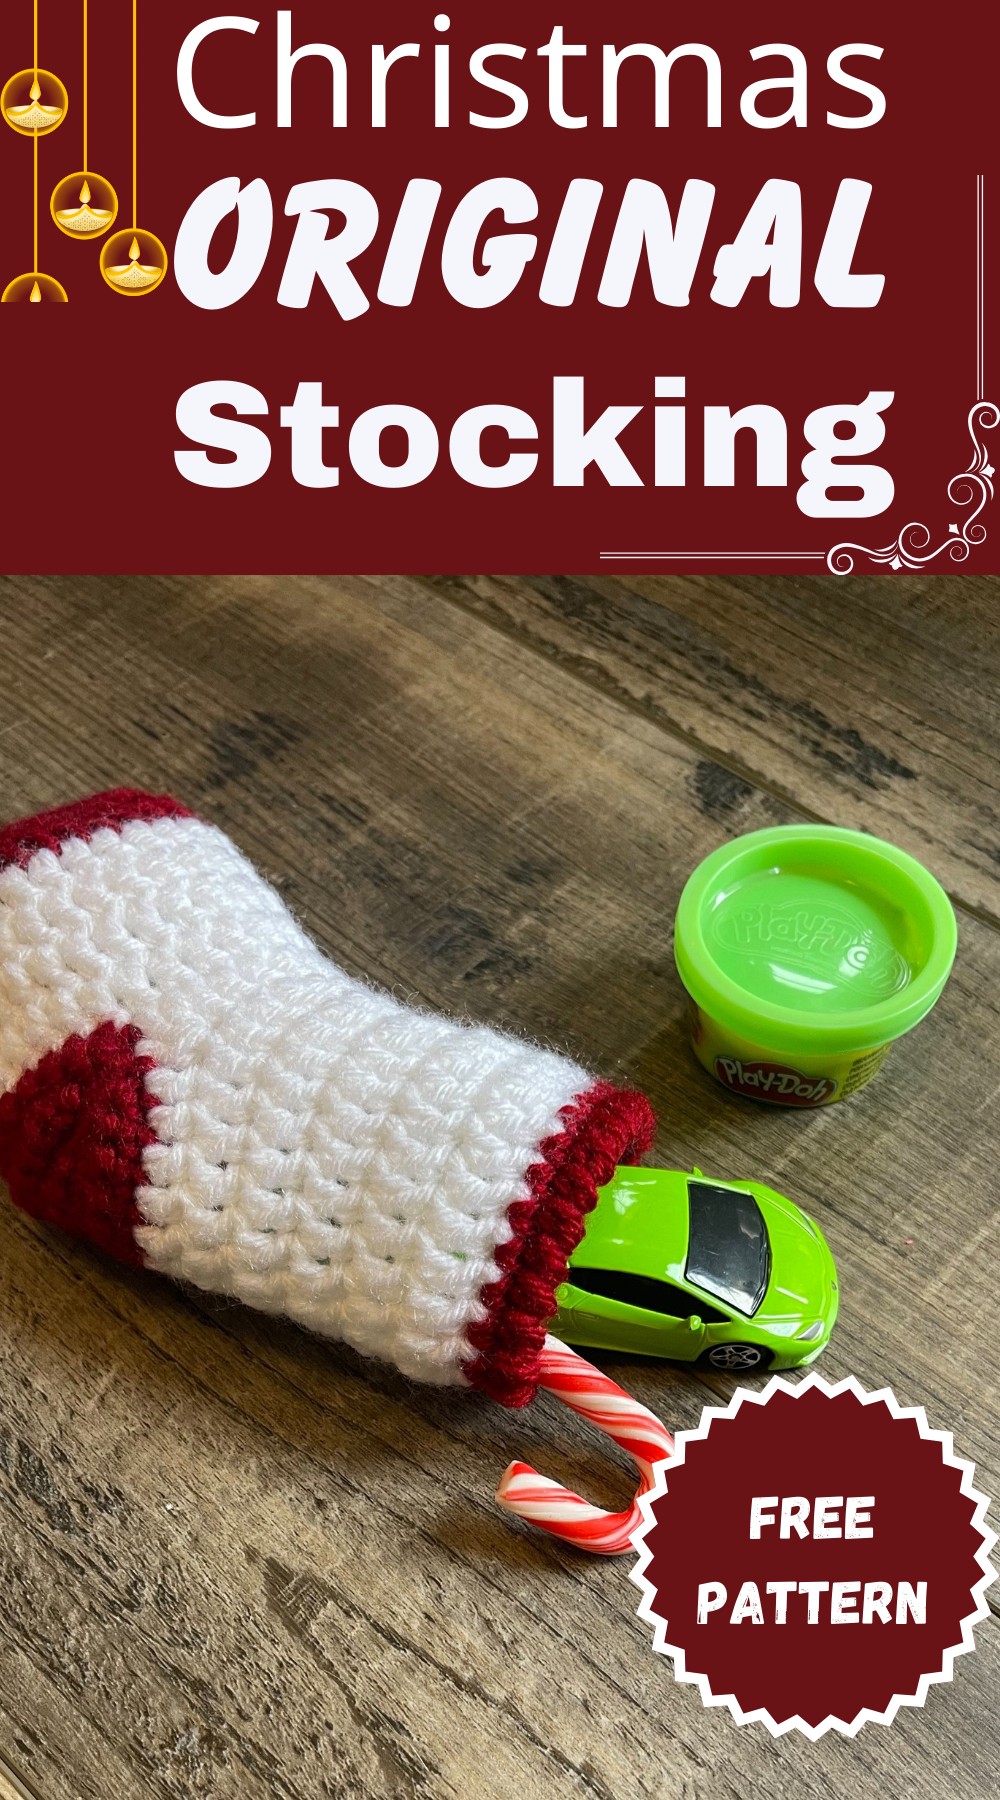 Mini Christmas Stocking Crochet Pattern